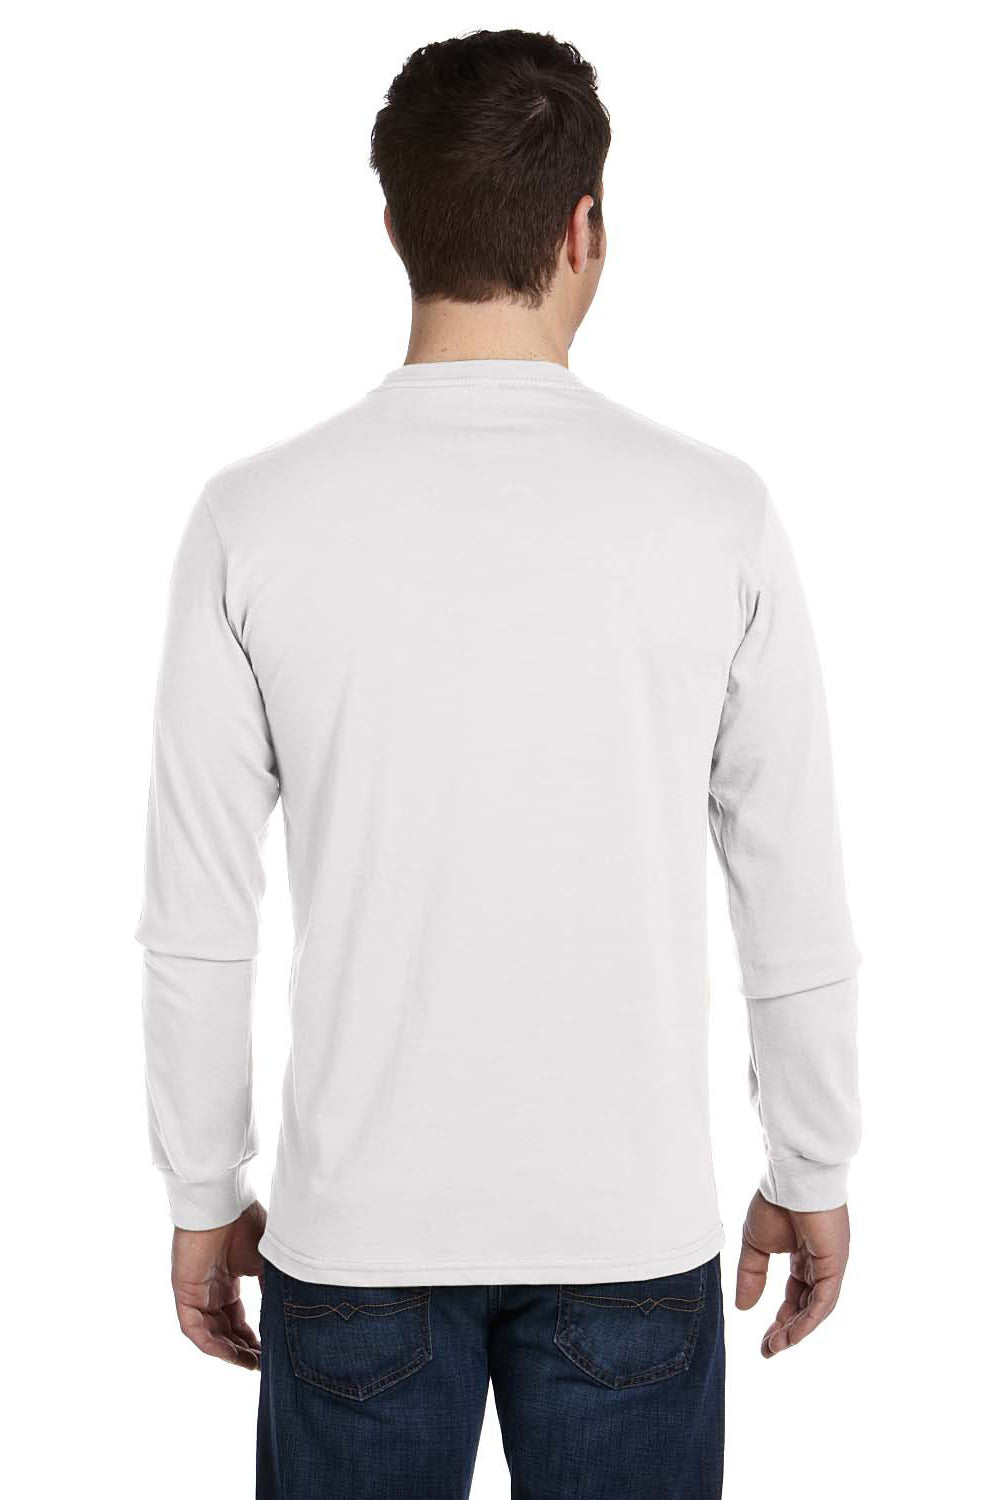 Econscious EC1500 Mens Long Sleeve Crewneck T-Shirt White Back